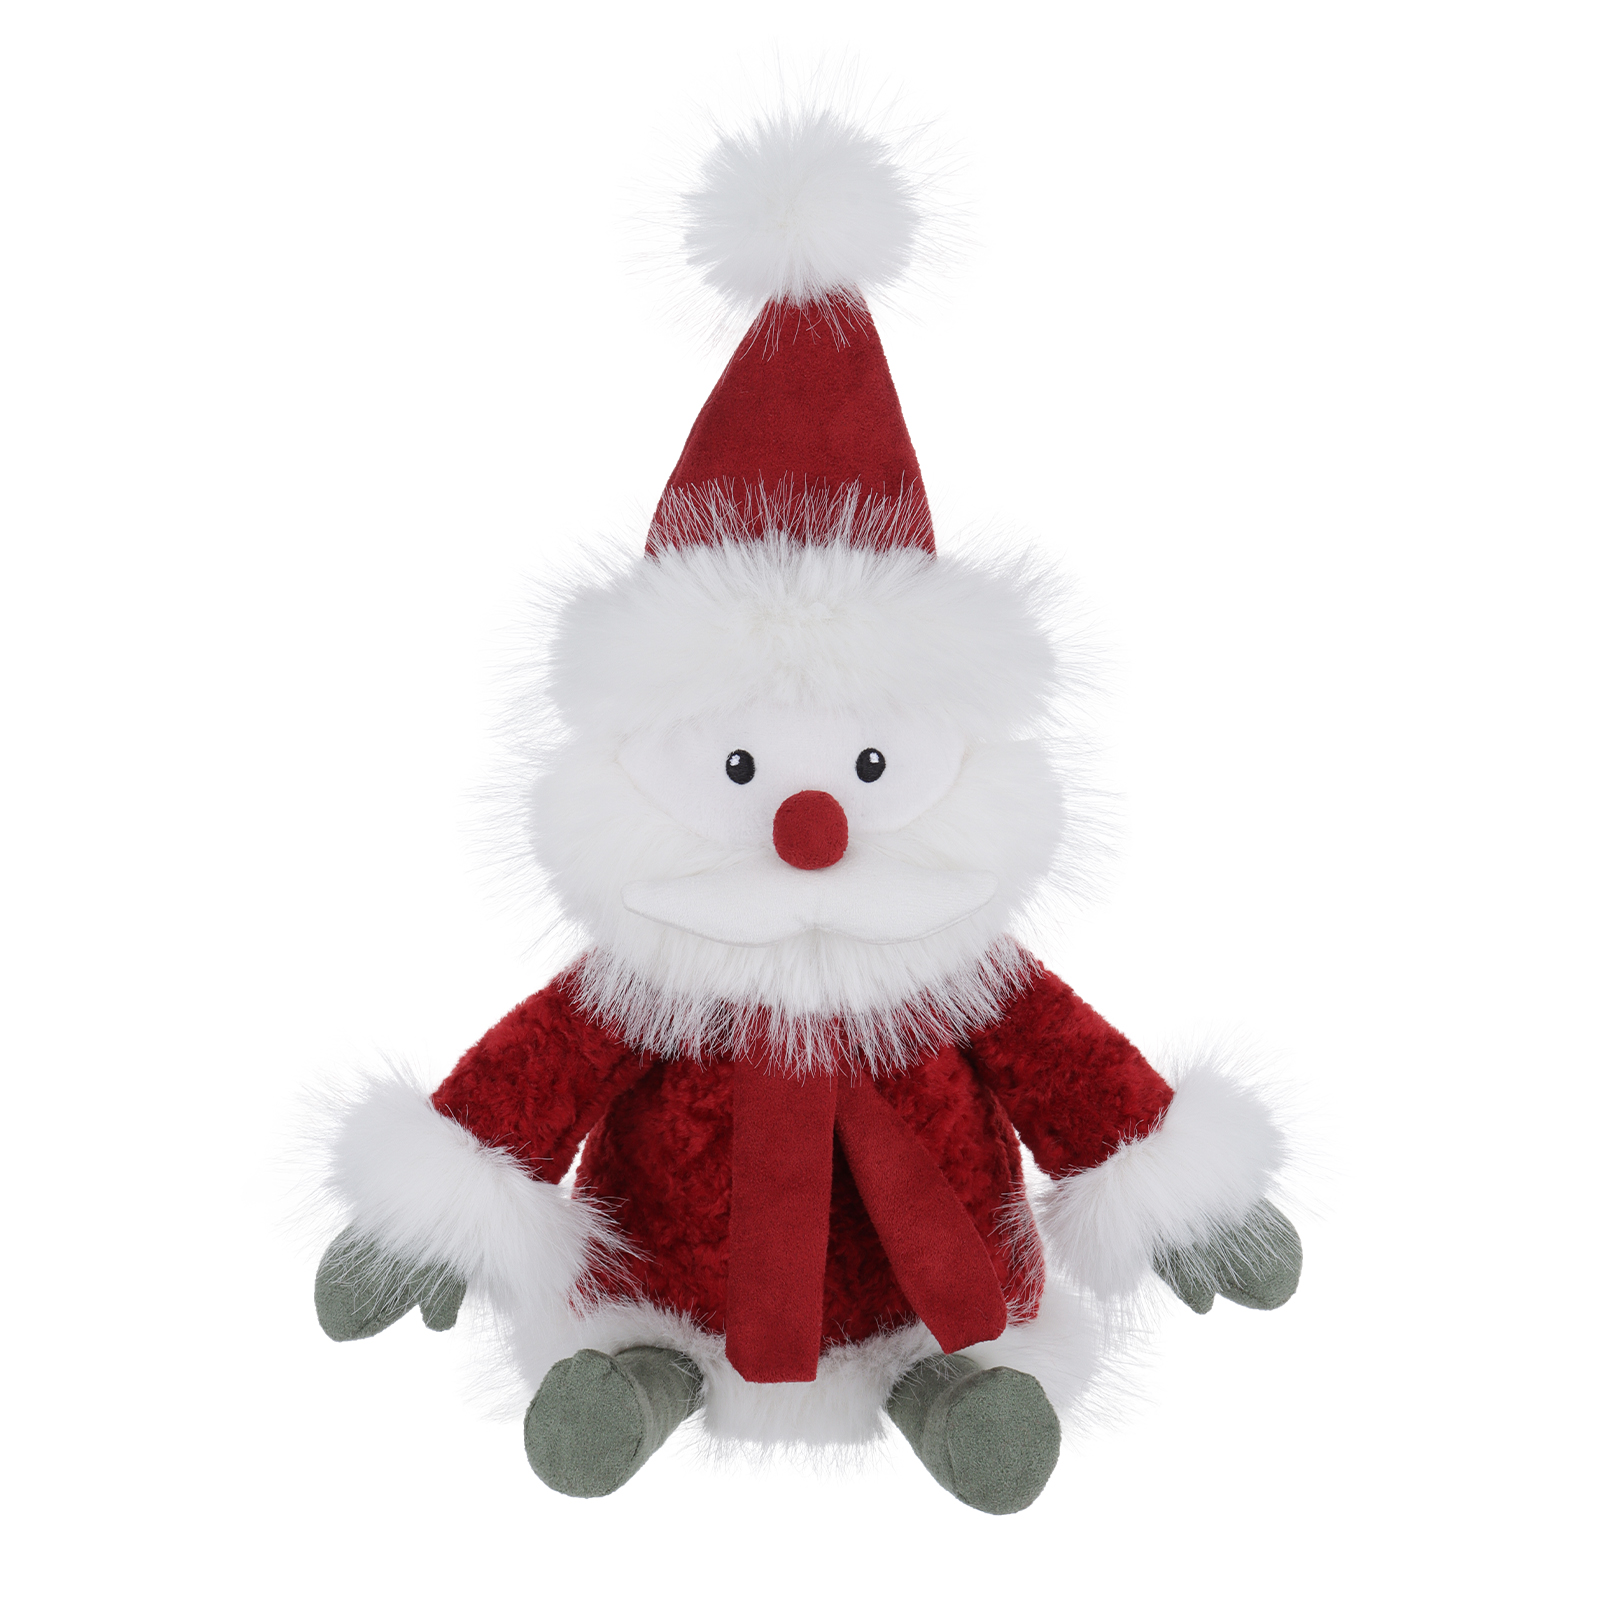 Apricot Lamb winter Santa  Stuffed Animal Soft Plush Toys